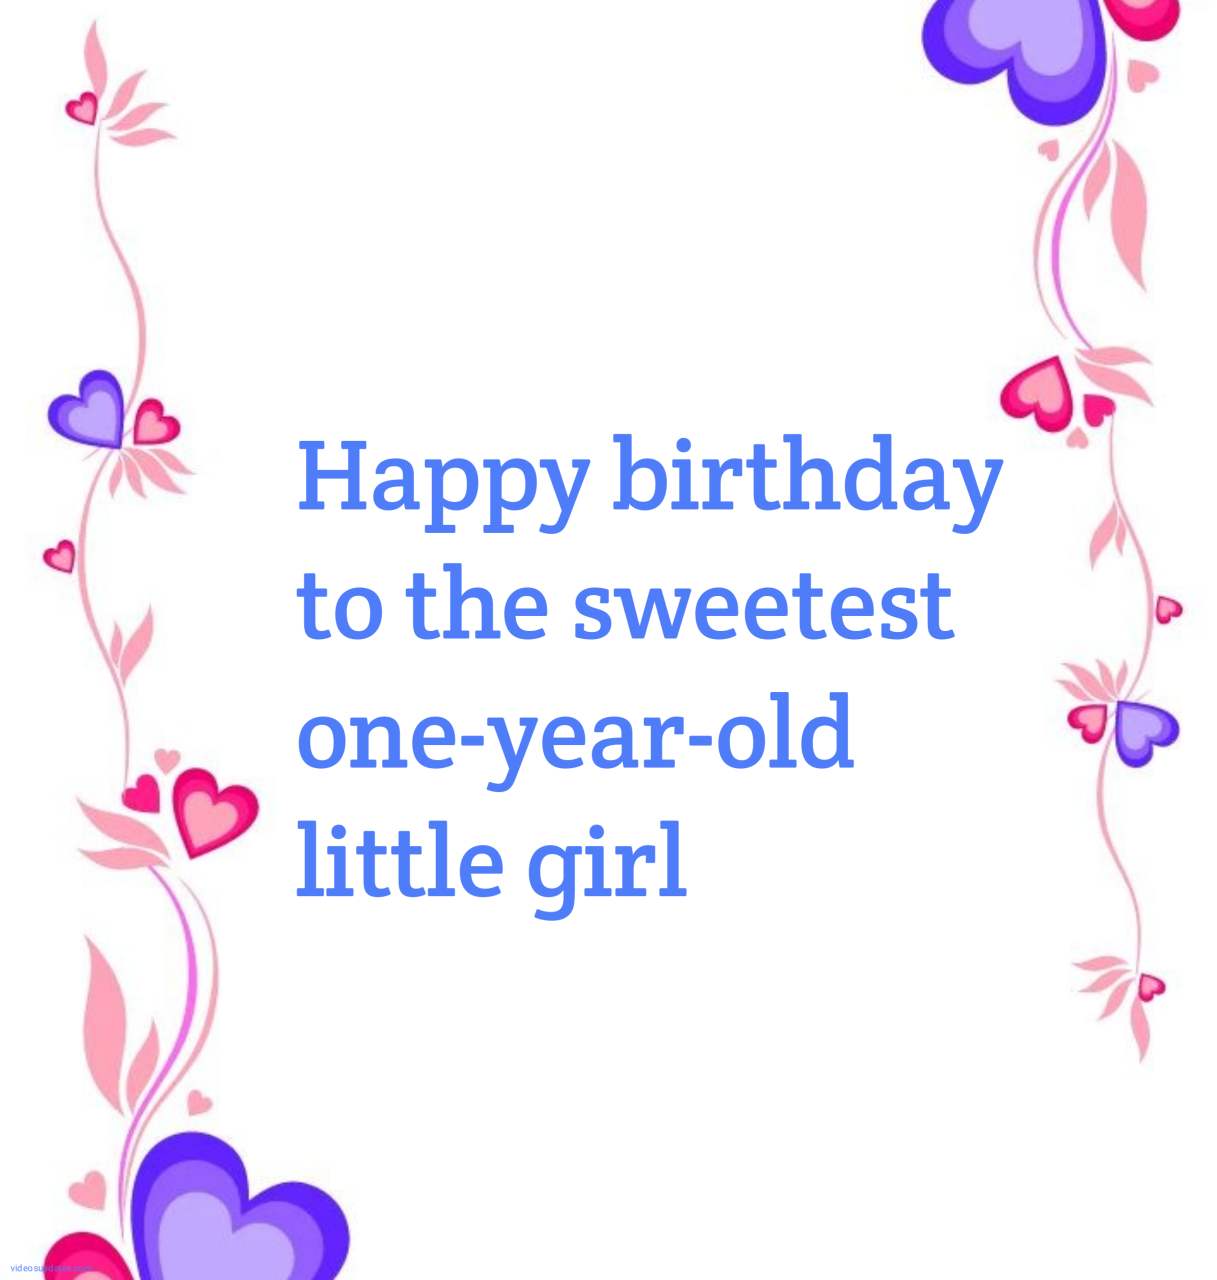 https://videosupdates.com/1st-birthday-wishes-for-niece/